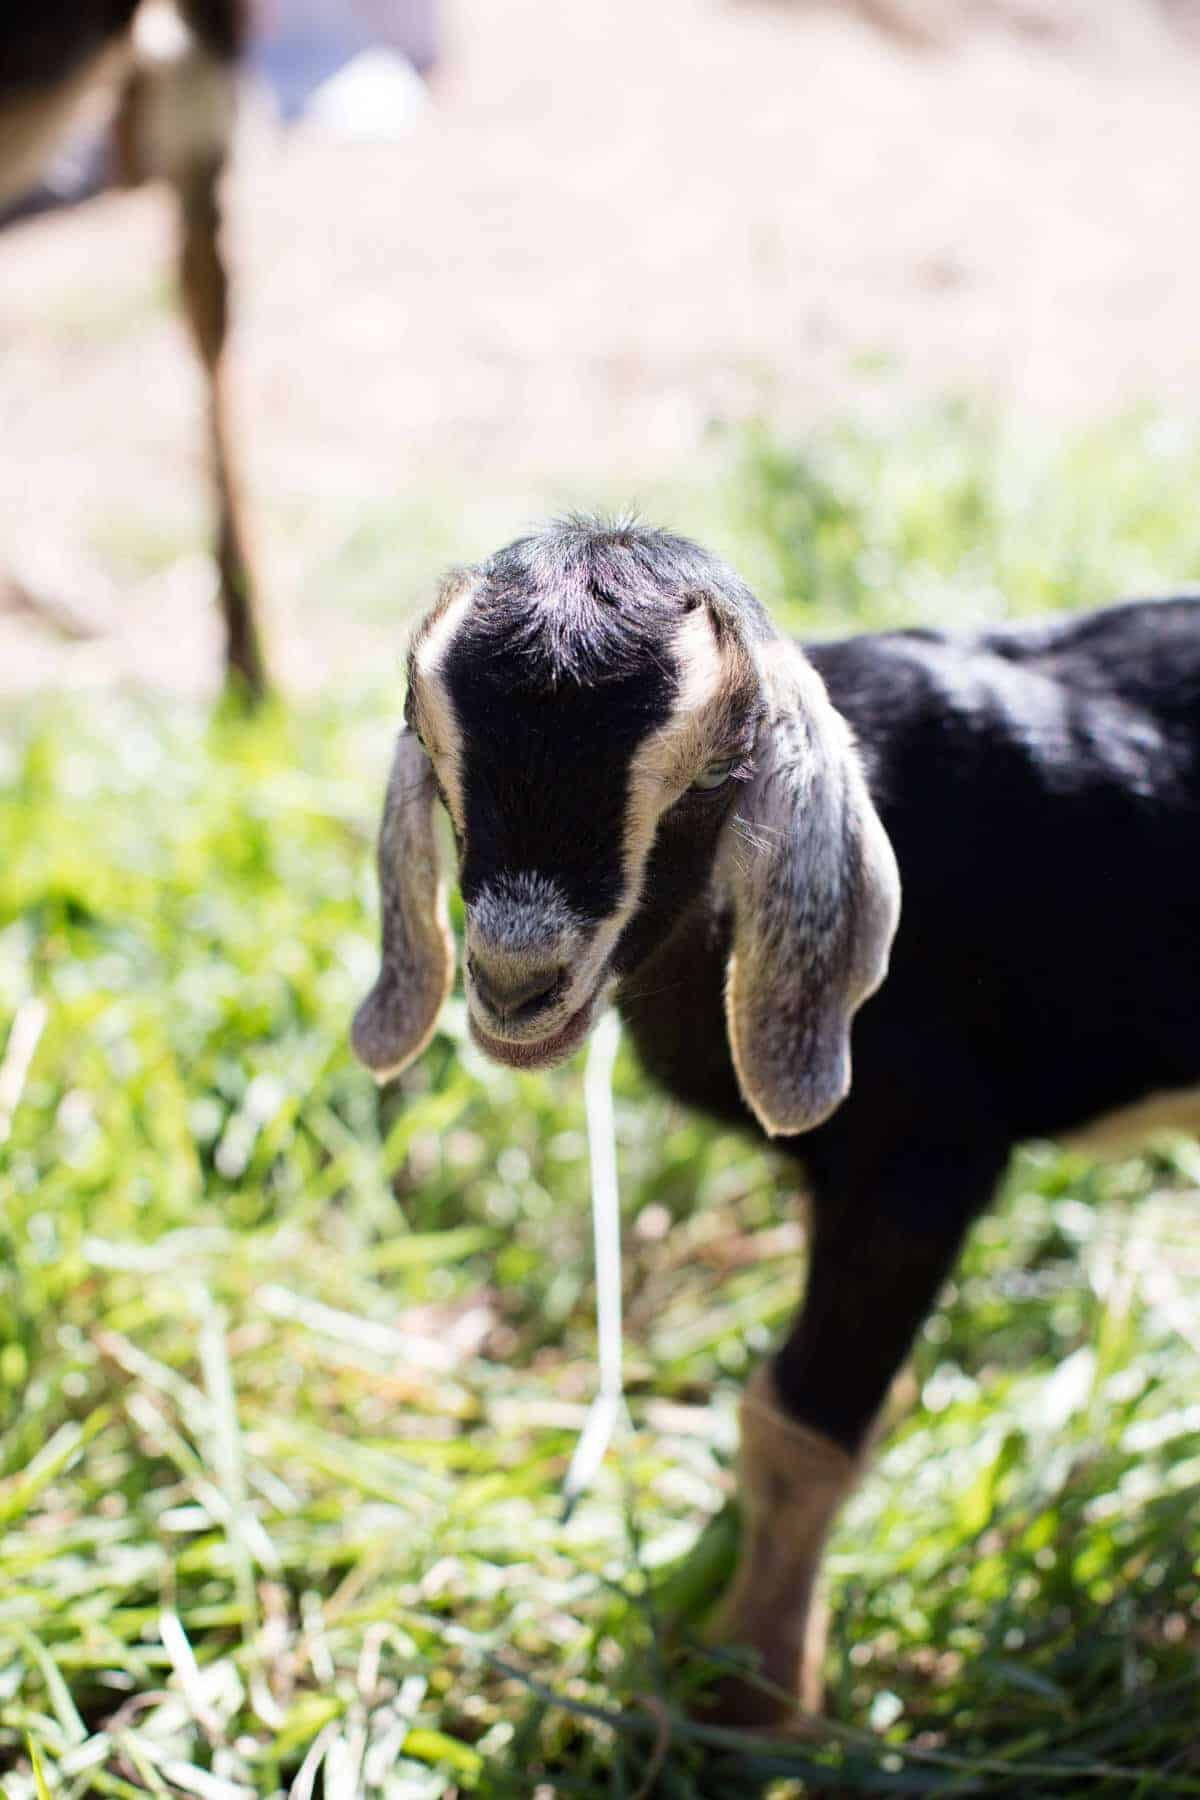 Floppy-eared Black Nubian Baby Goat Wallpaper